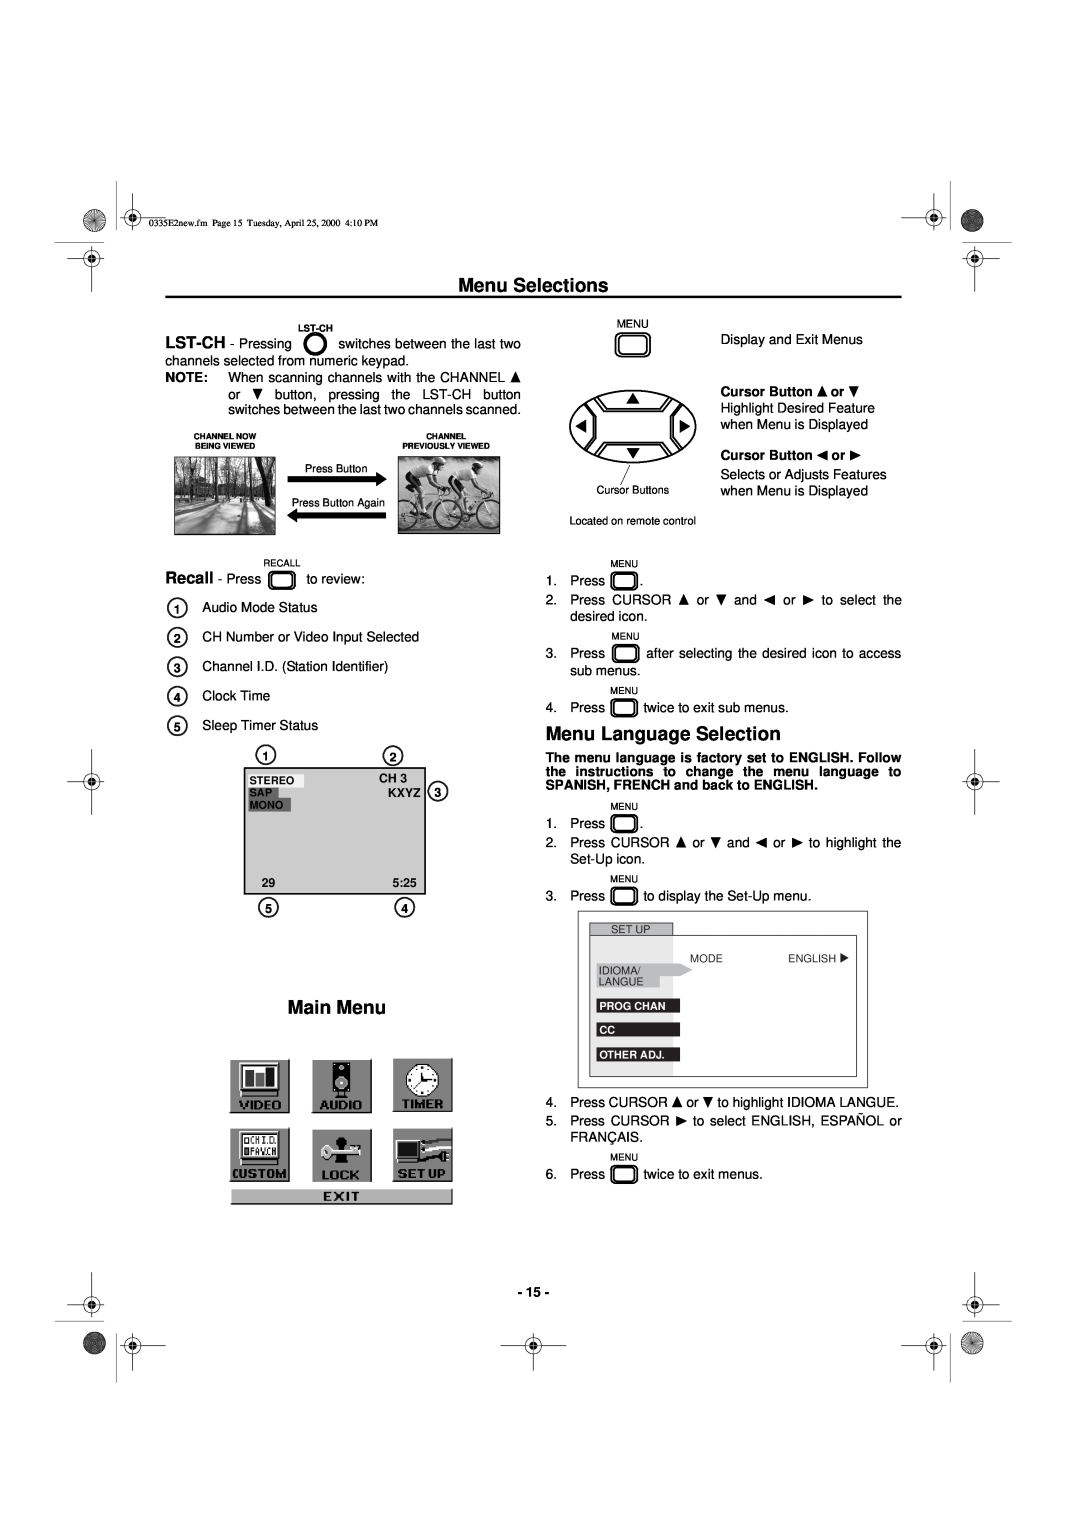 Hitachi 27GX01B manual Menu Selections, Main Menu, Menu Language Selection, Cursor Button, Kxyz, 29525 